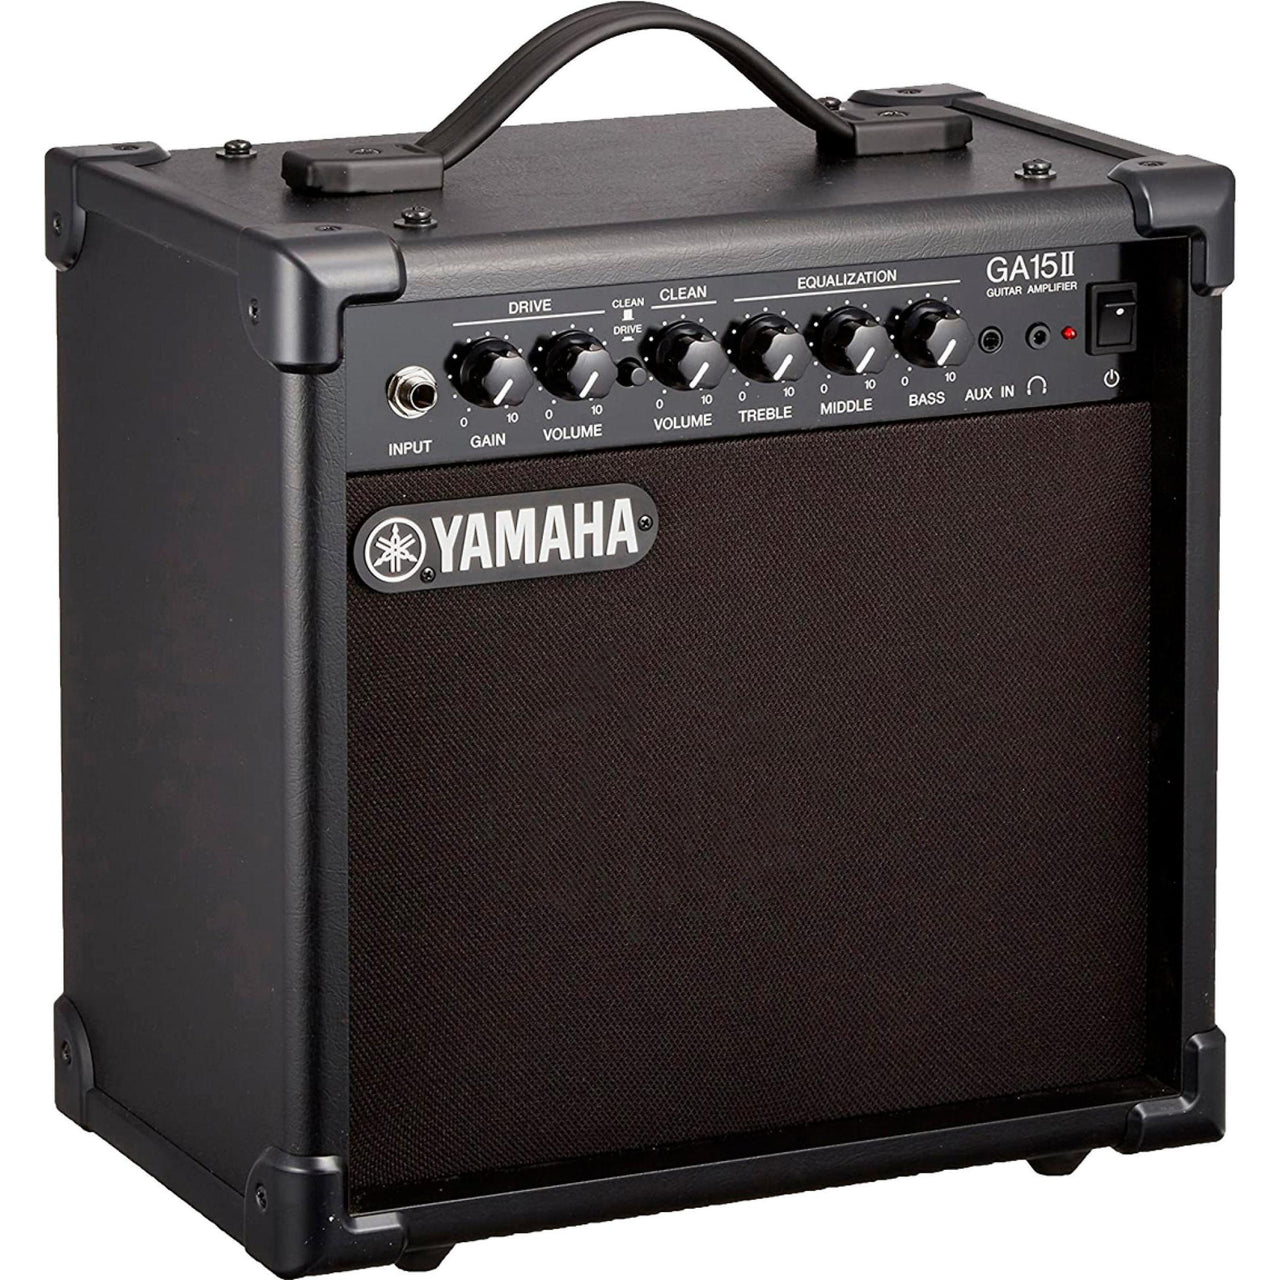 Amplificador Yamaha Ga15ii Para Guitarra 15w